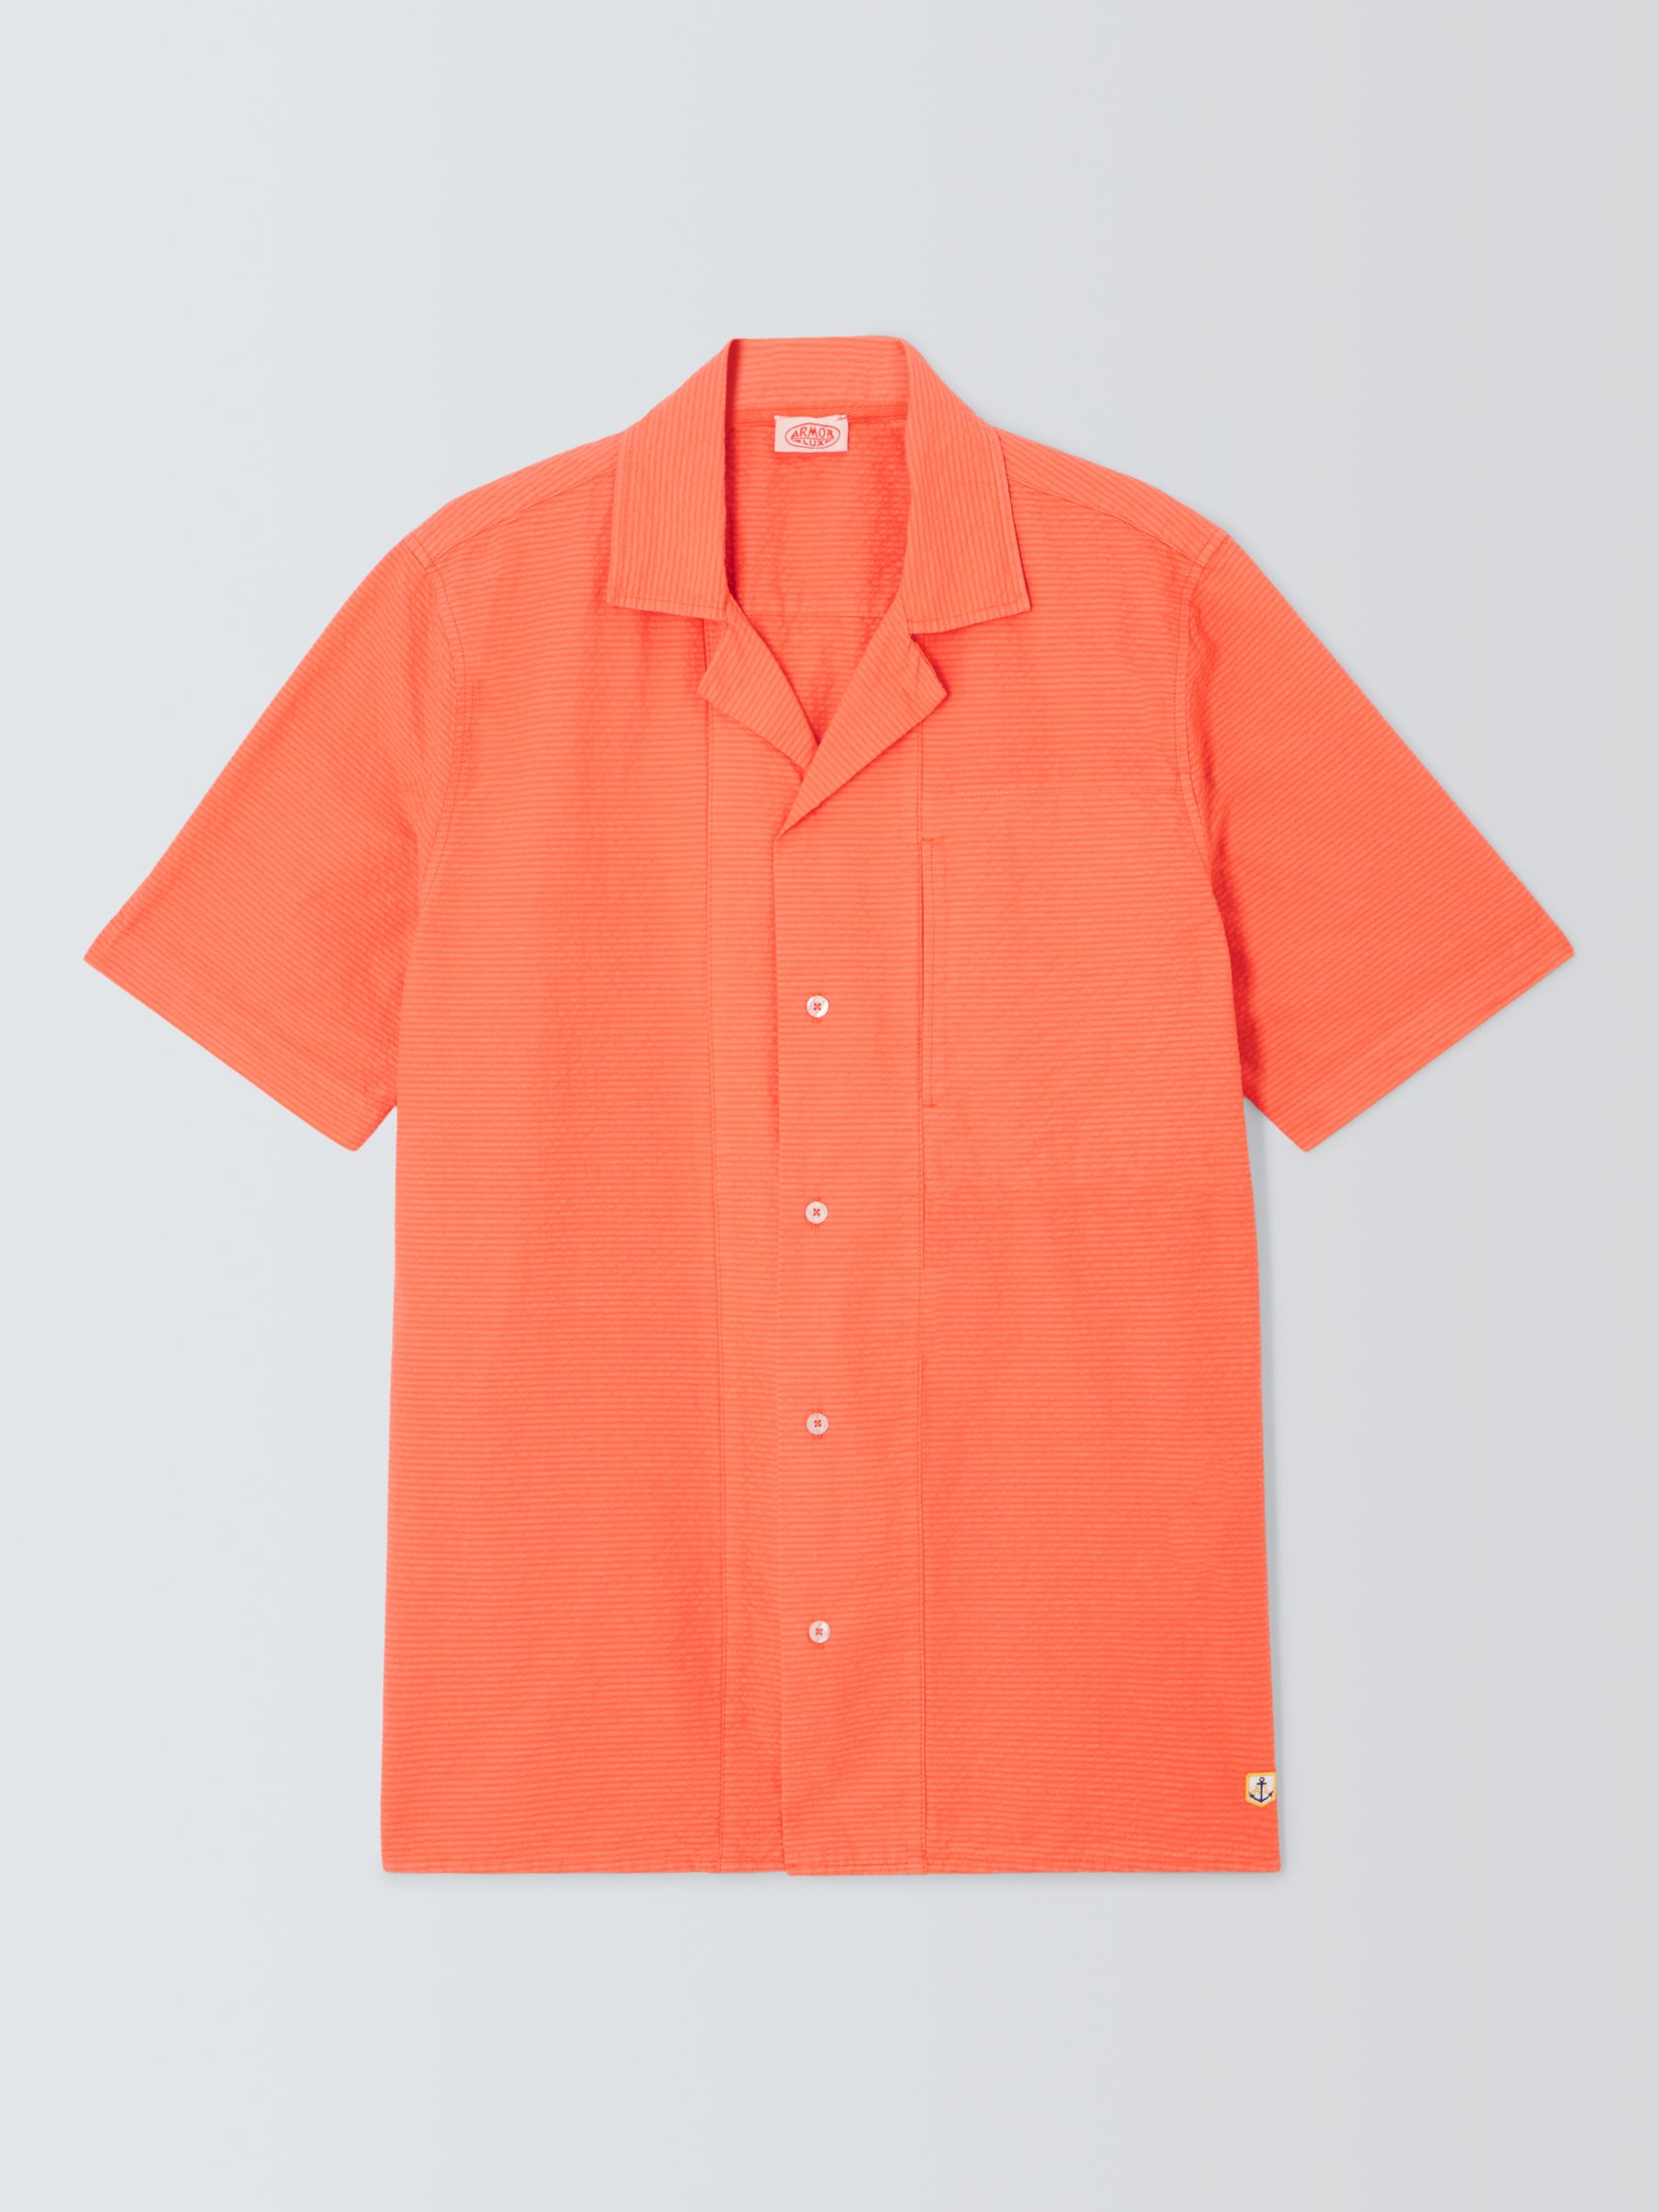 Armor Lux Chemise Short Sleeve Shirt, Coral E24, XL